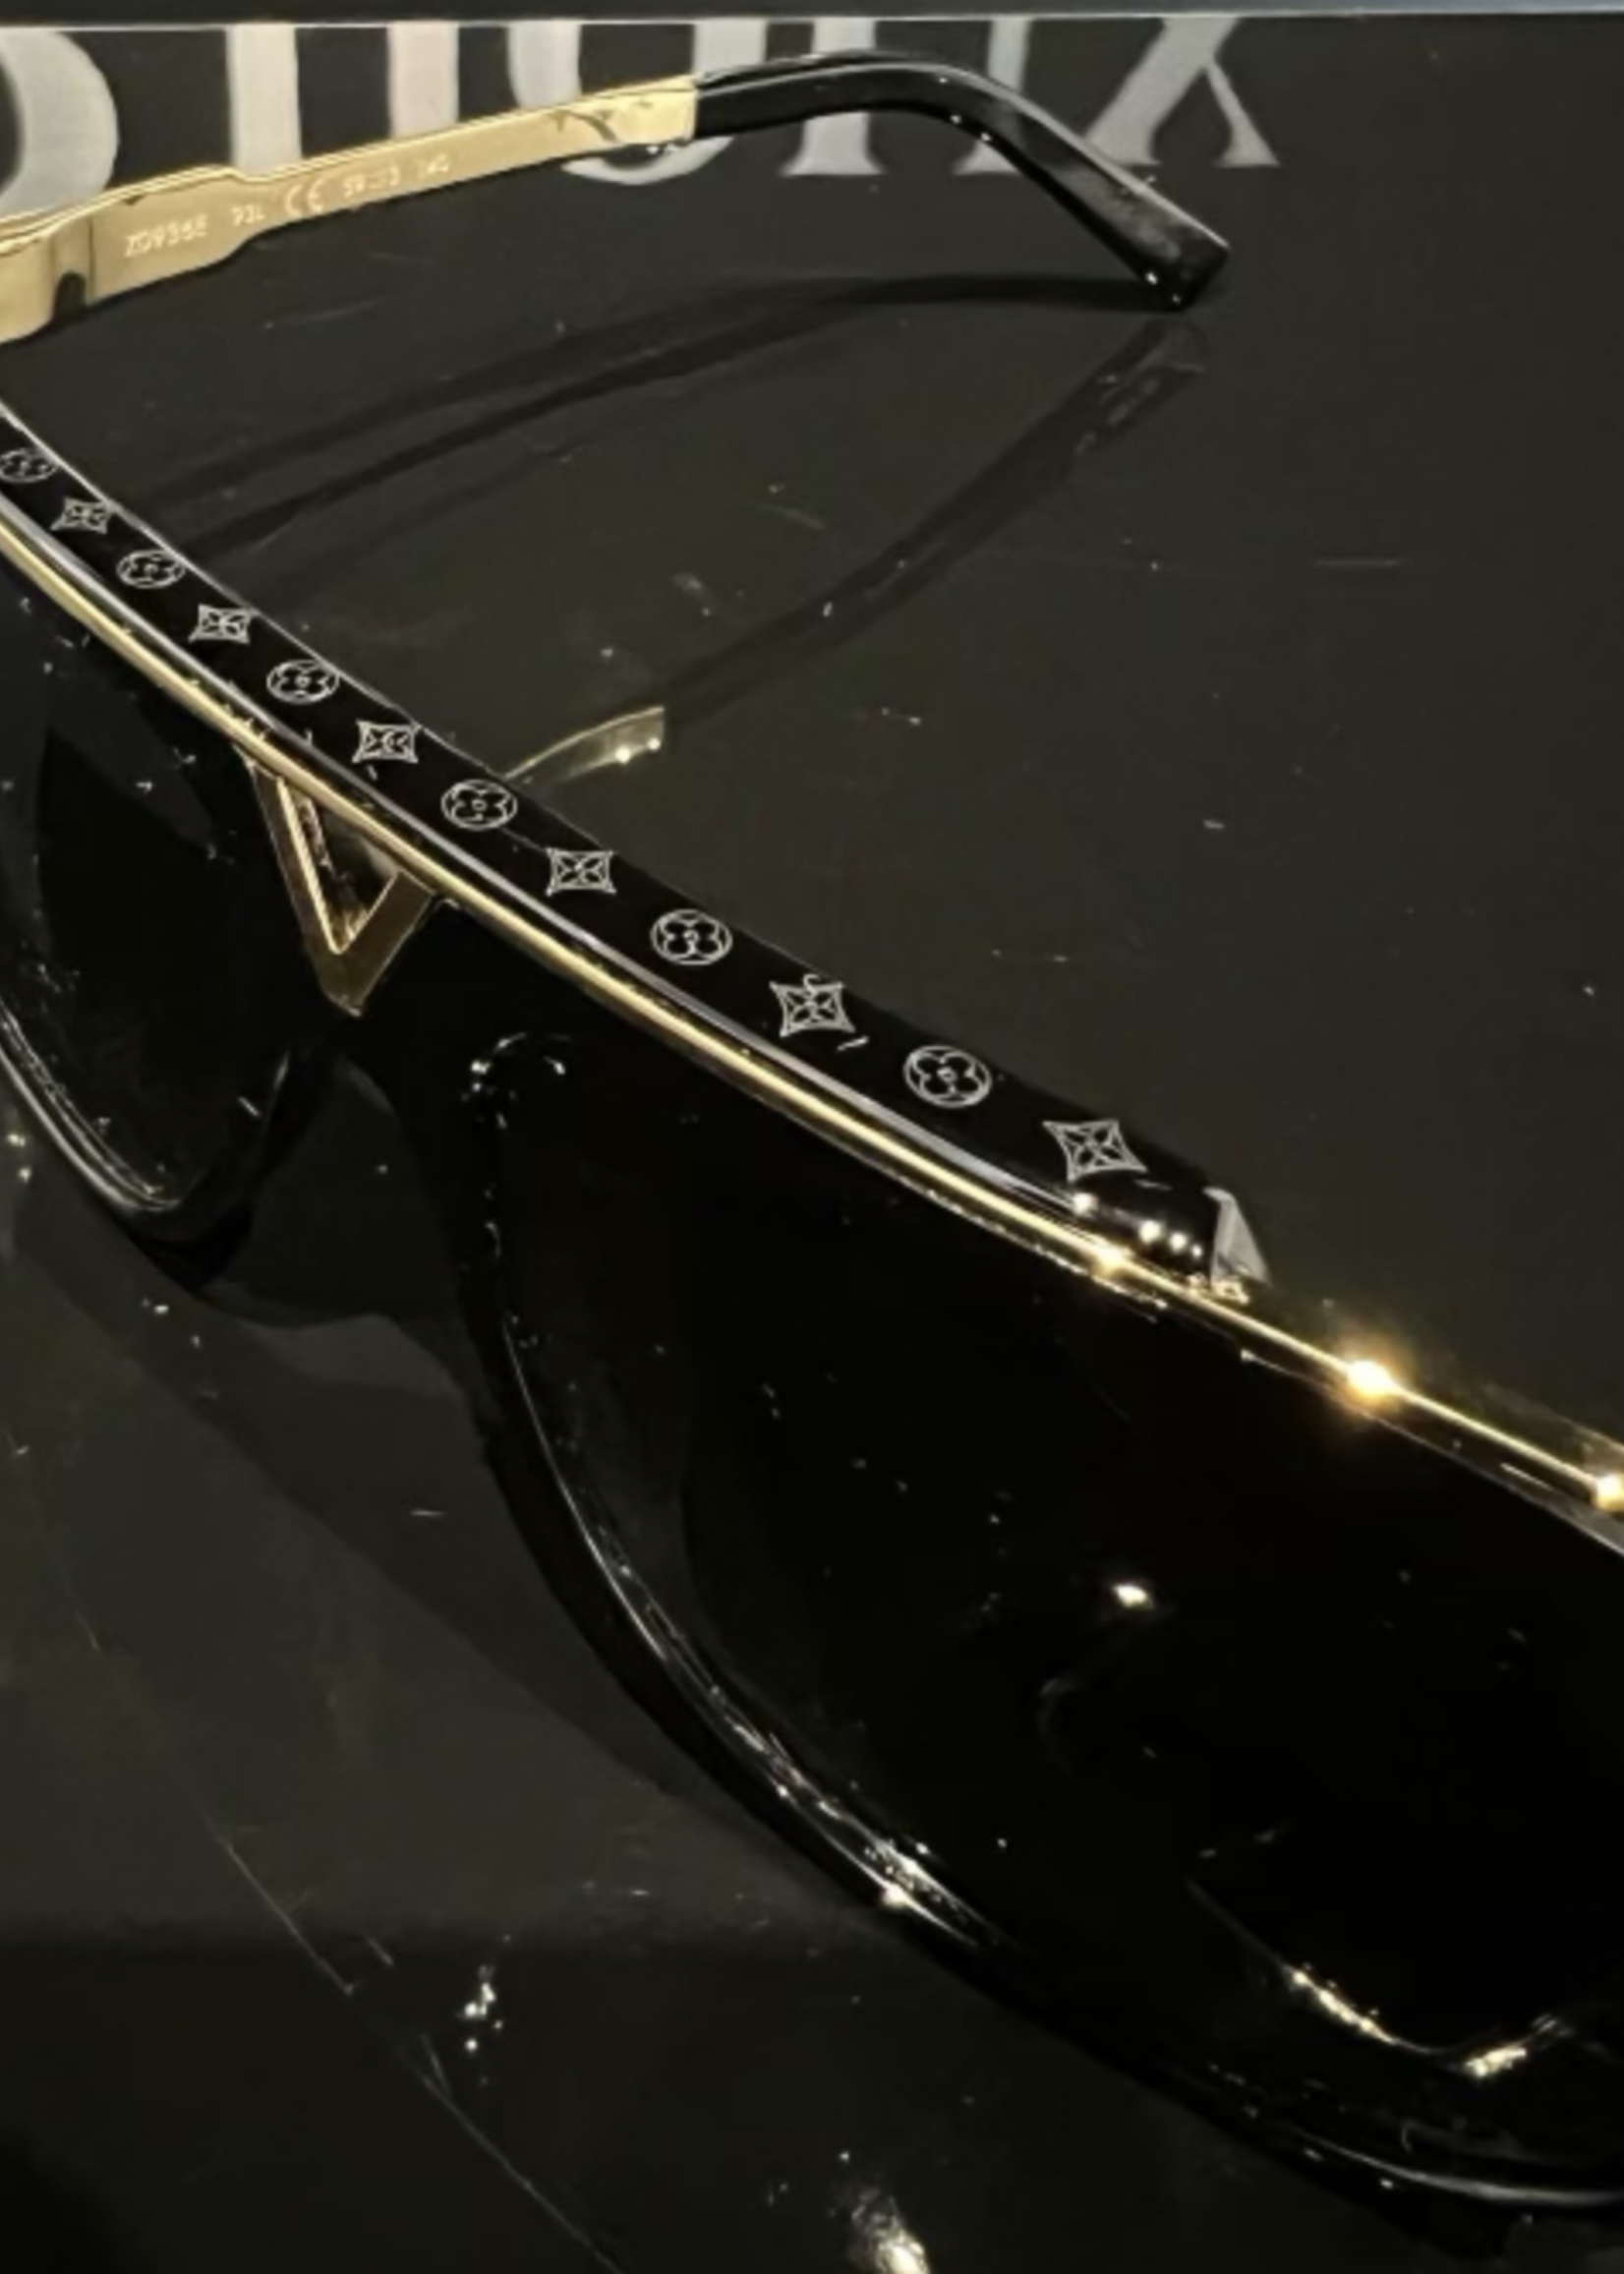 Louis Vuitton Mascot Sunglasses in 2023